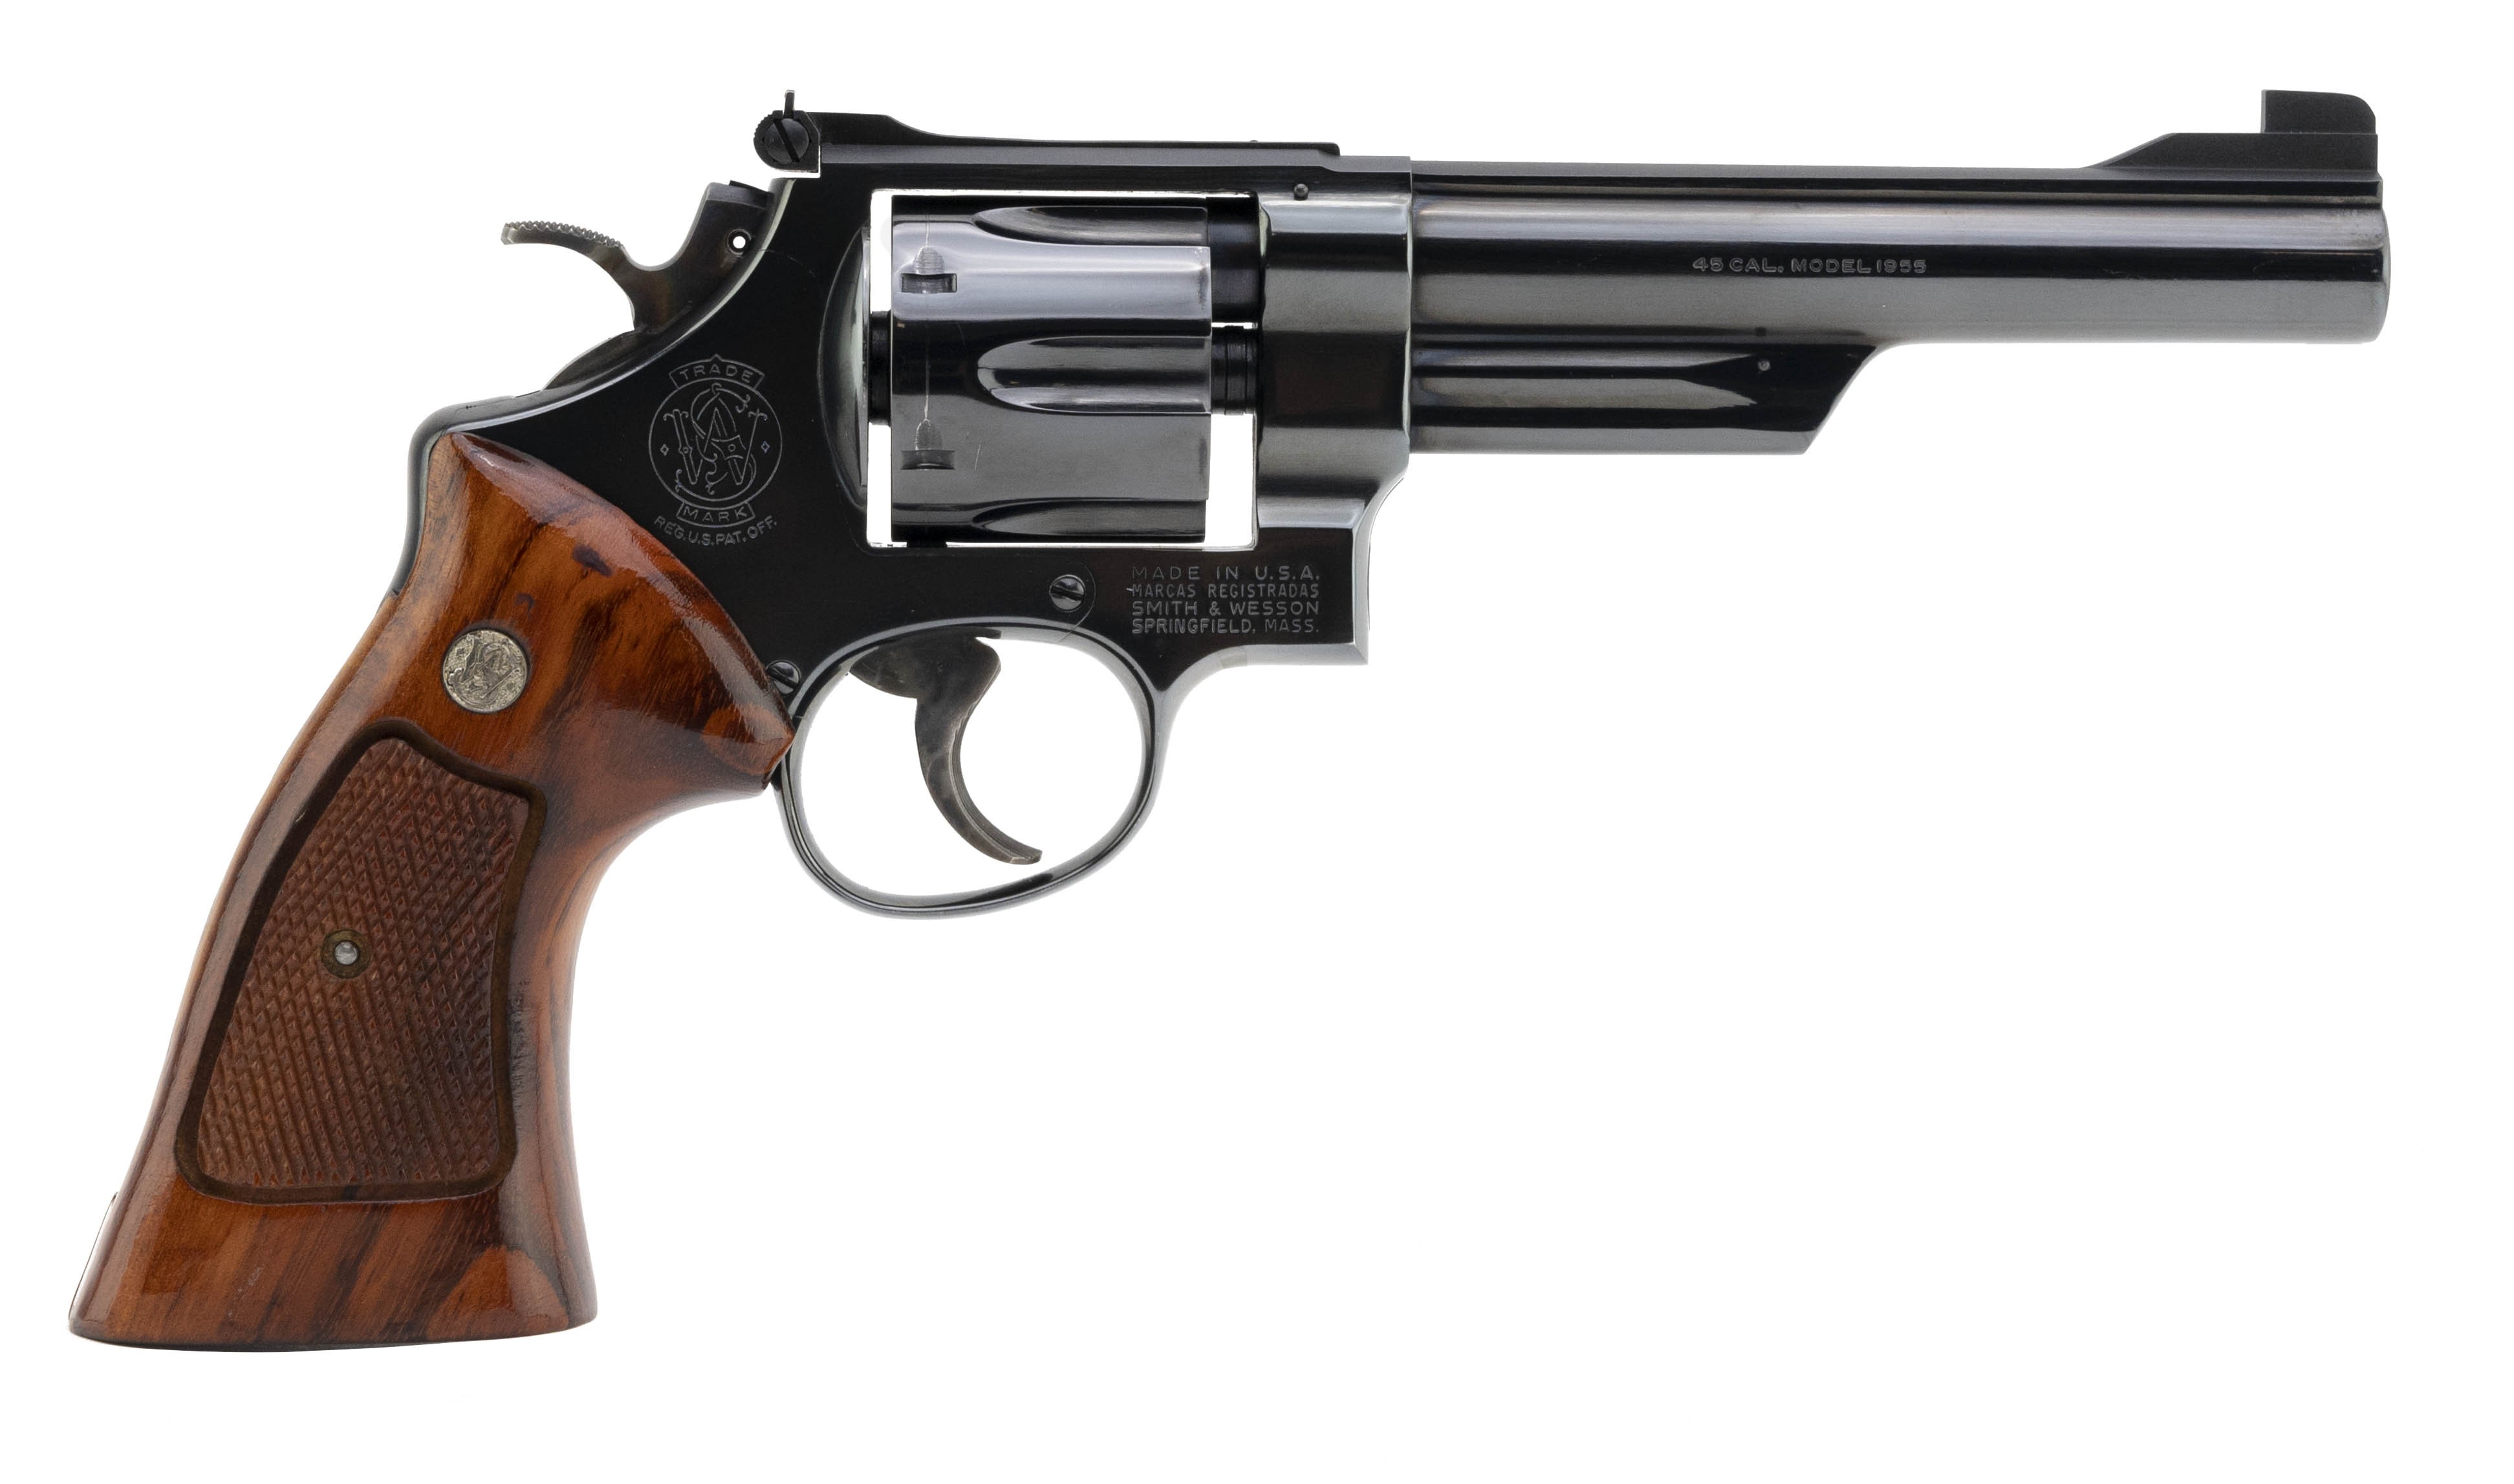 Smith & Wesson 25-2 .45 Acp Caliber Revolver For Sale. 419